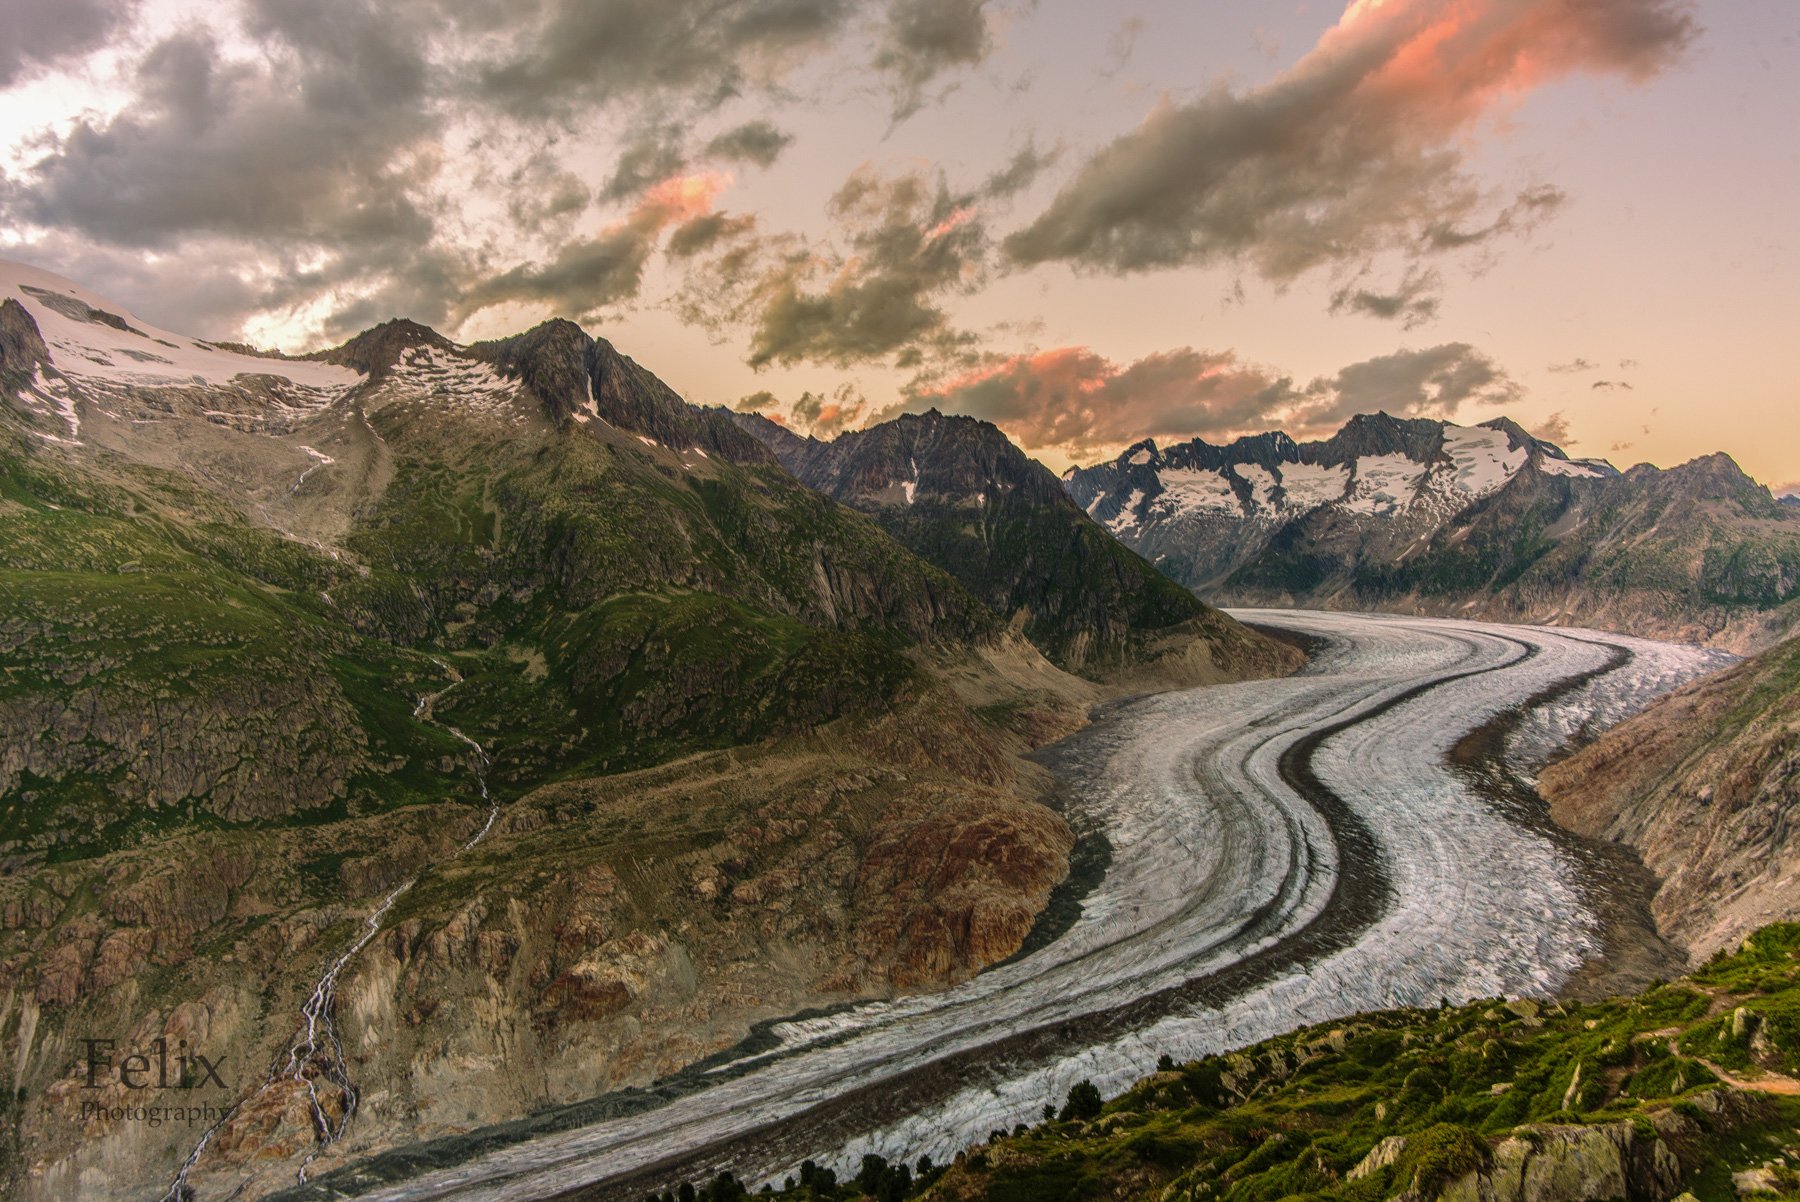 aletch glacier,switzerland,mountains,evening,bettmeralp,, Felix Ostapenko